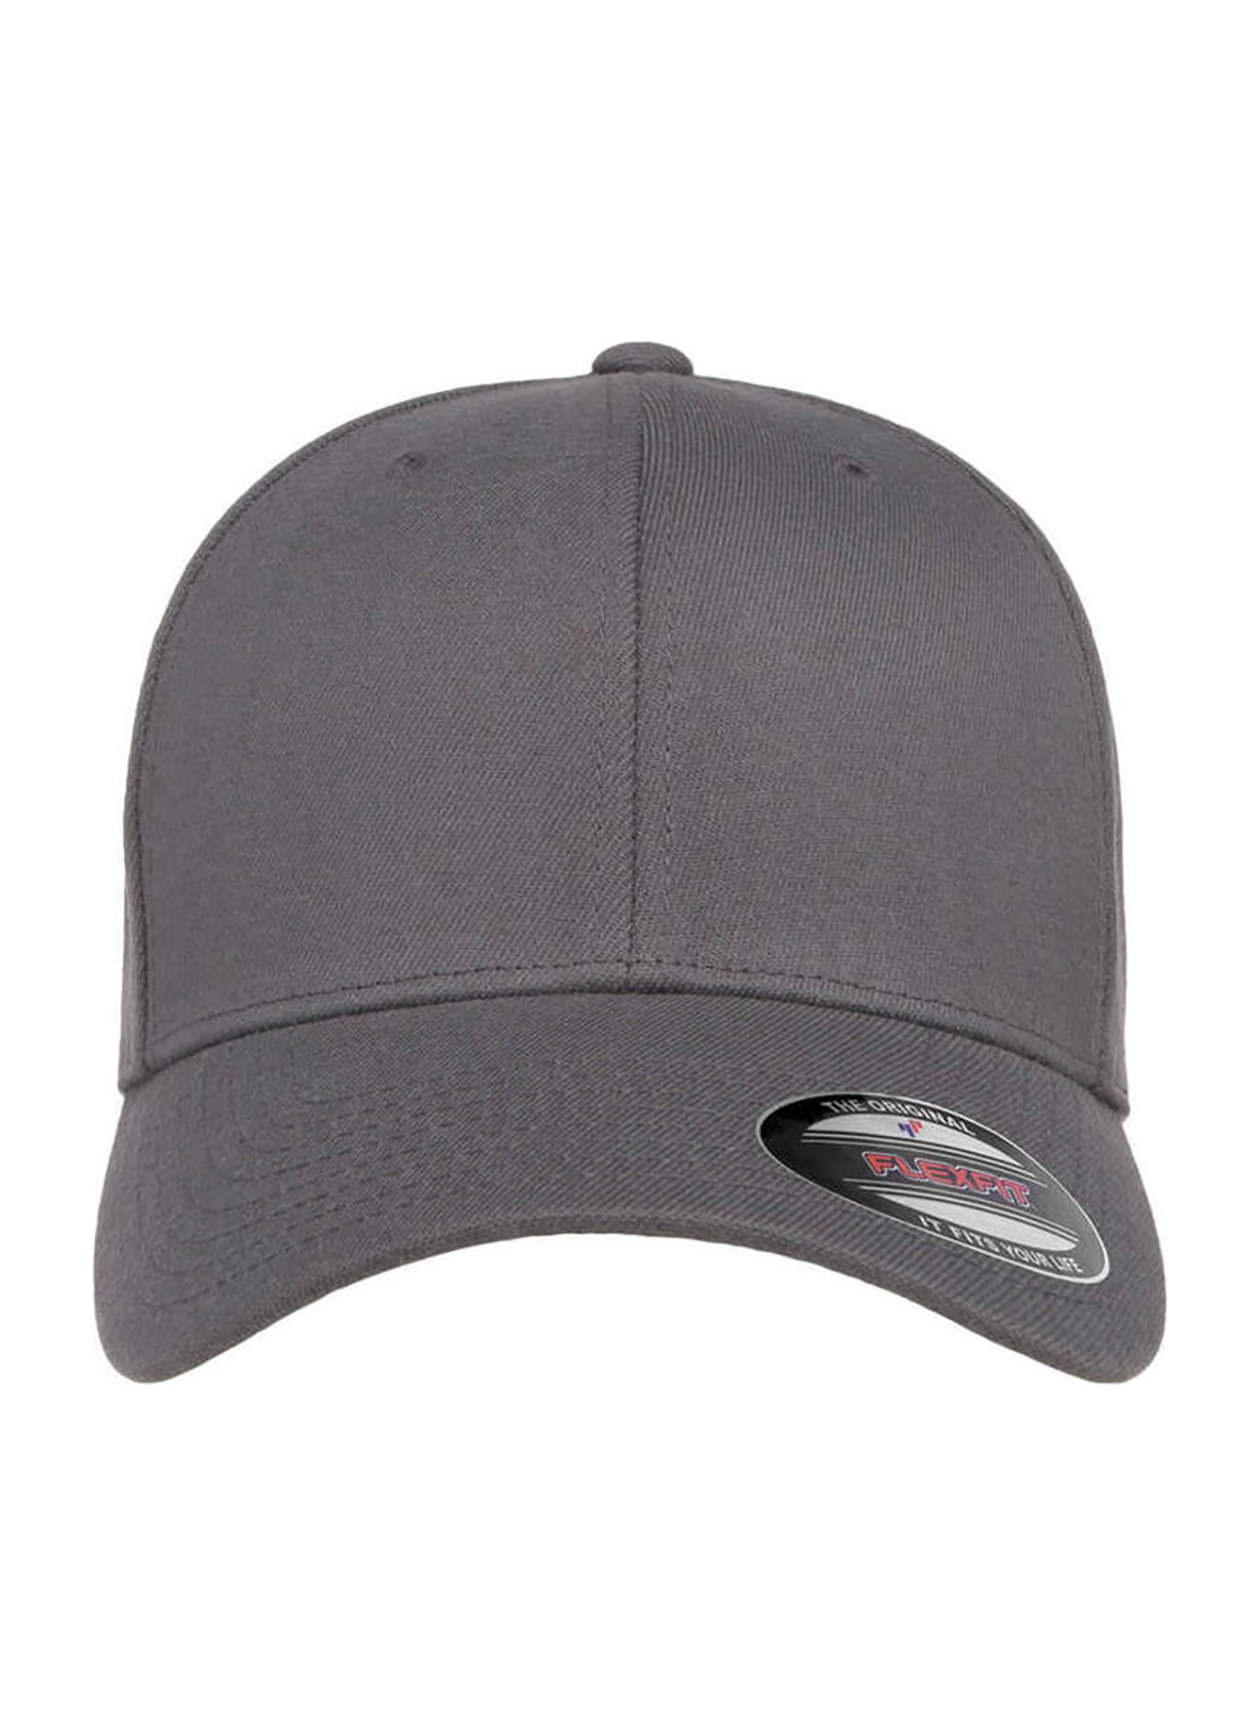 Flexfit Grey Wool Blend Hat